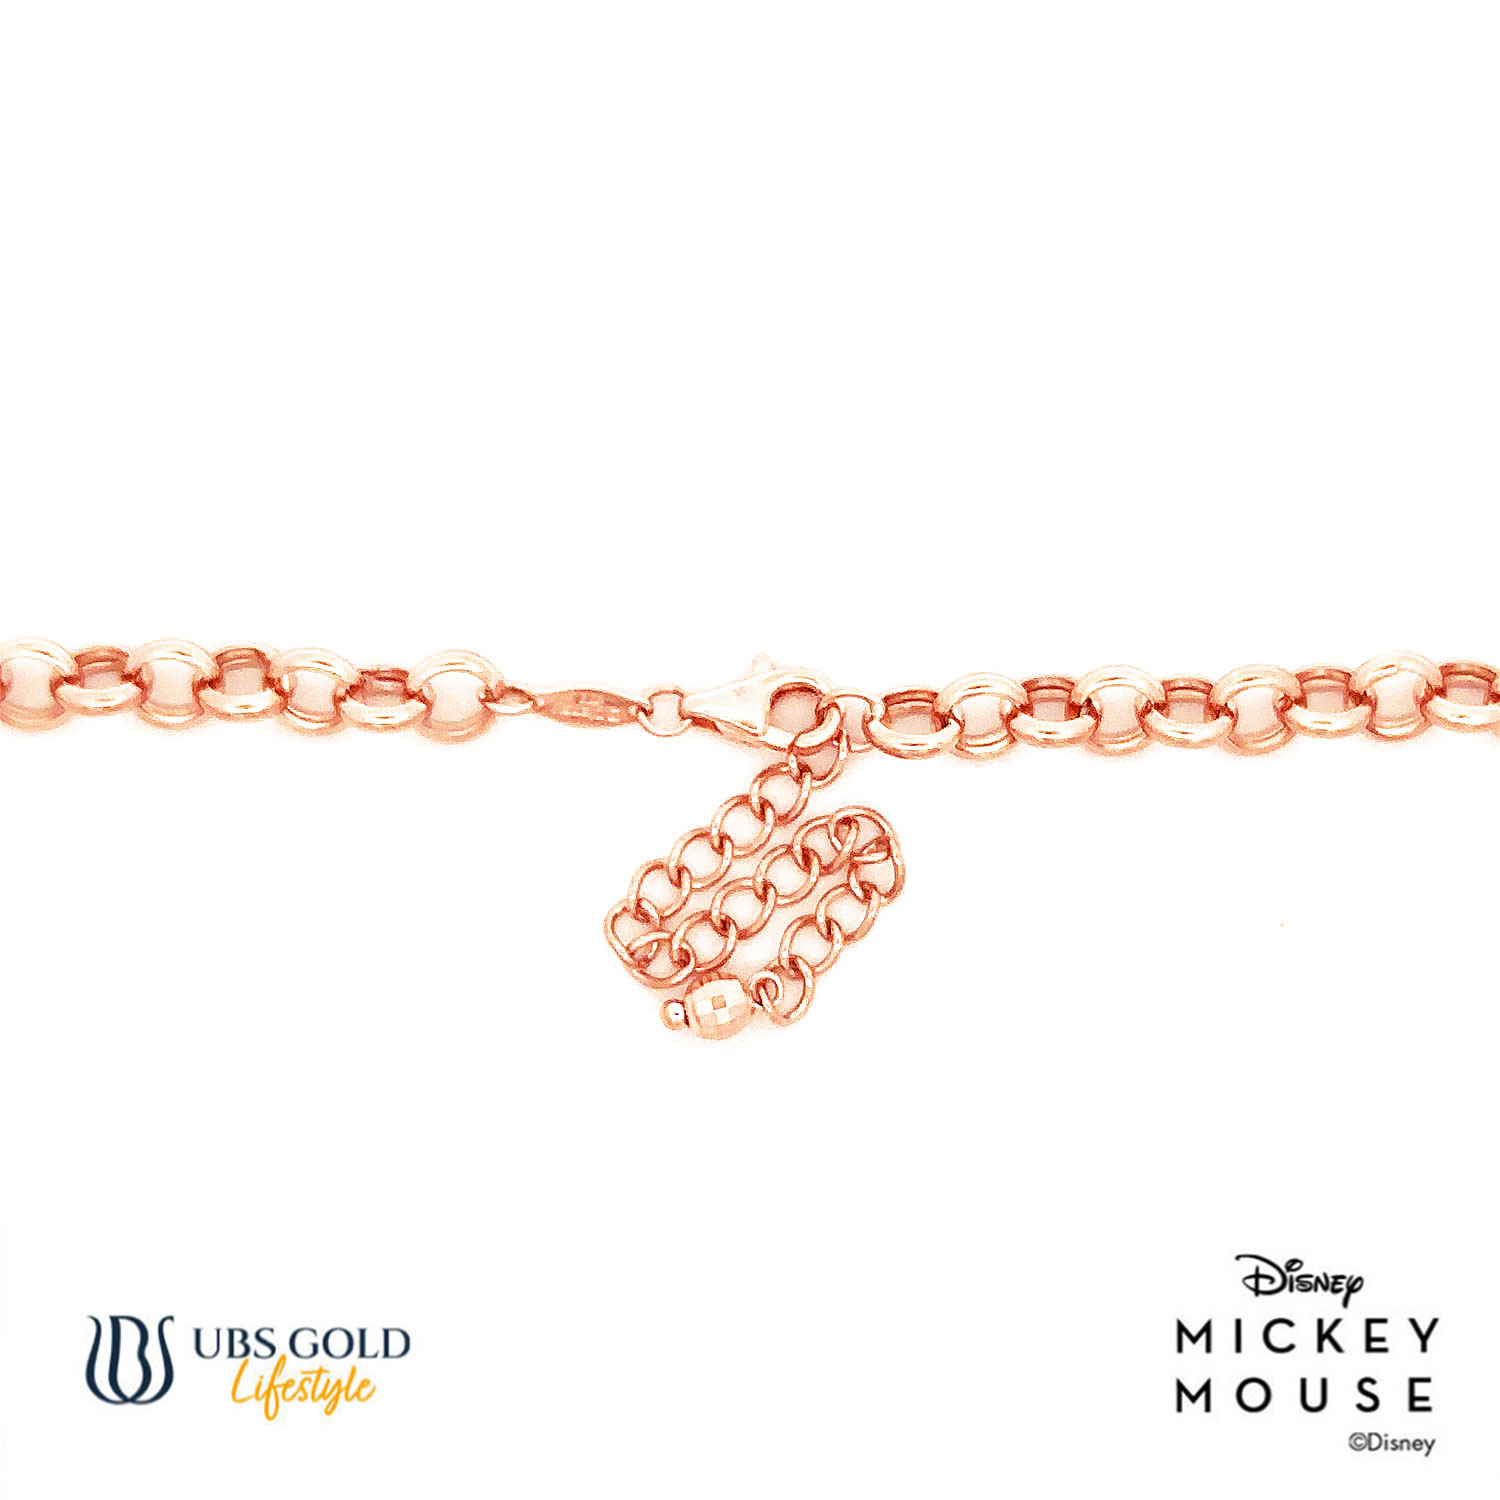 UBS Gold Kalung Emas Disney Mickey Mouse - Hky0215 - 17K